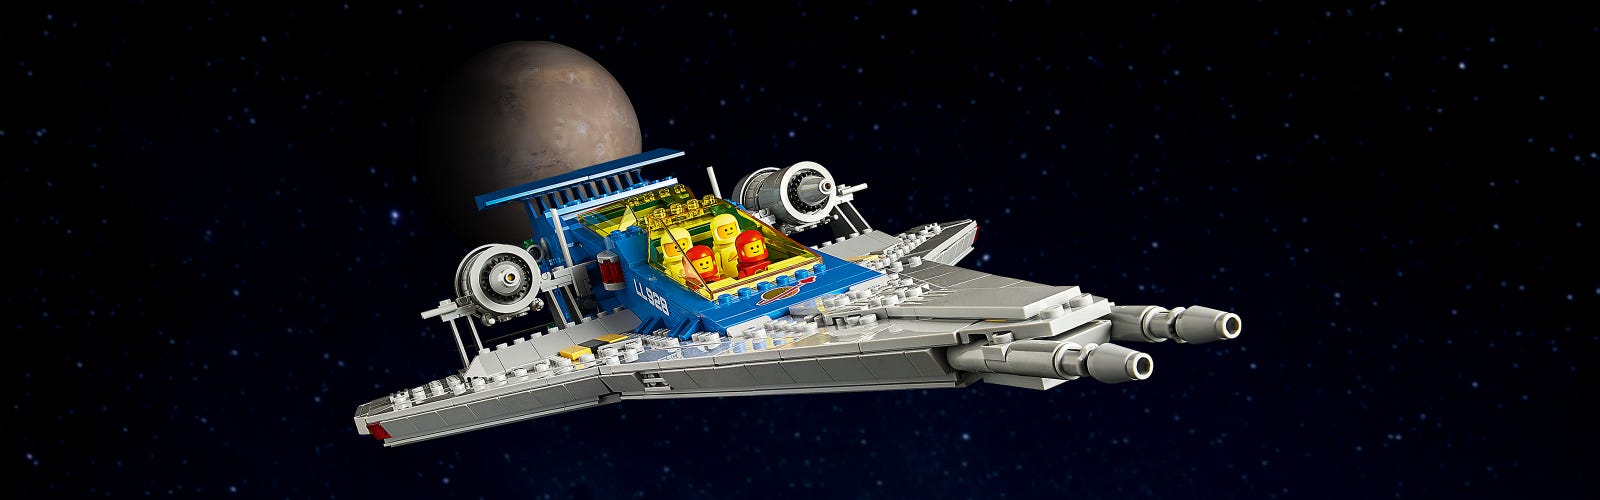 1980s lego spaceship